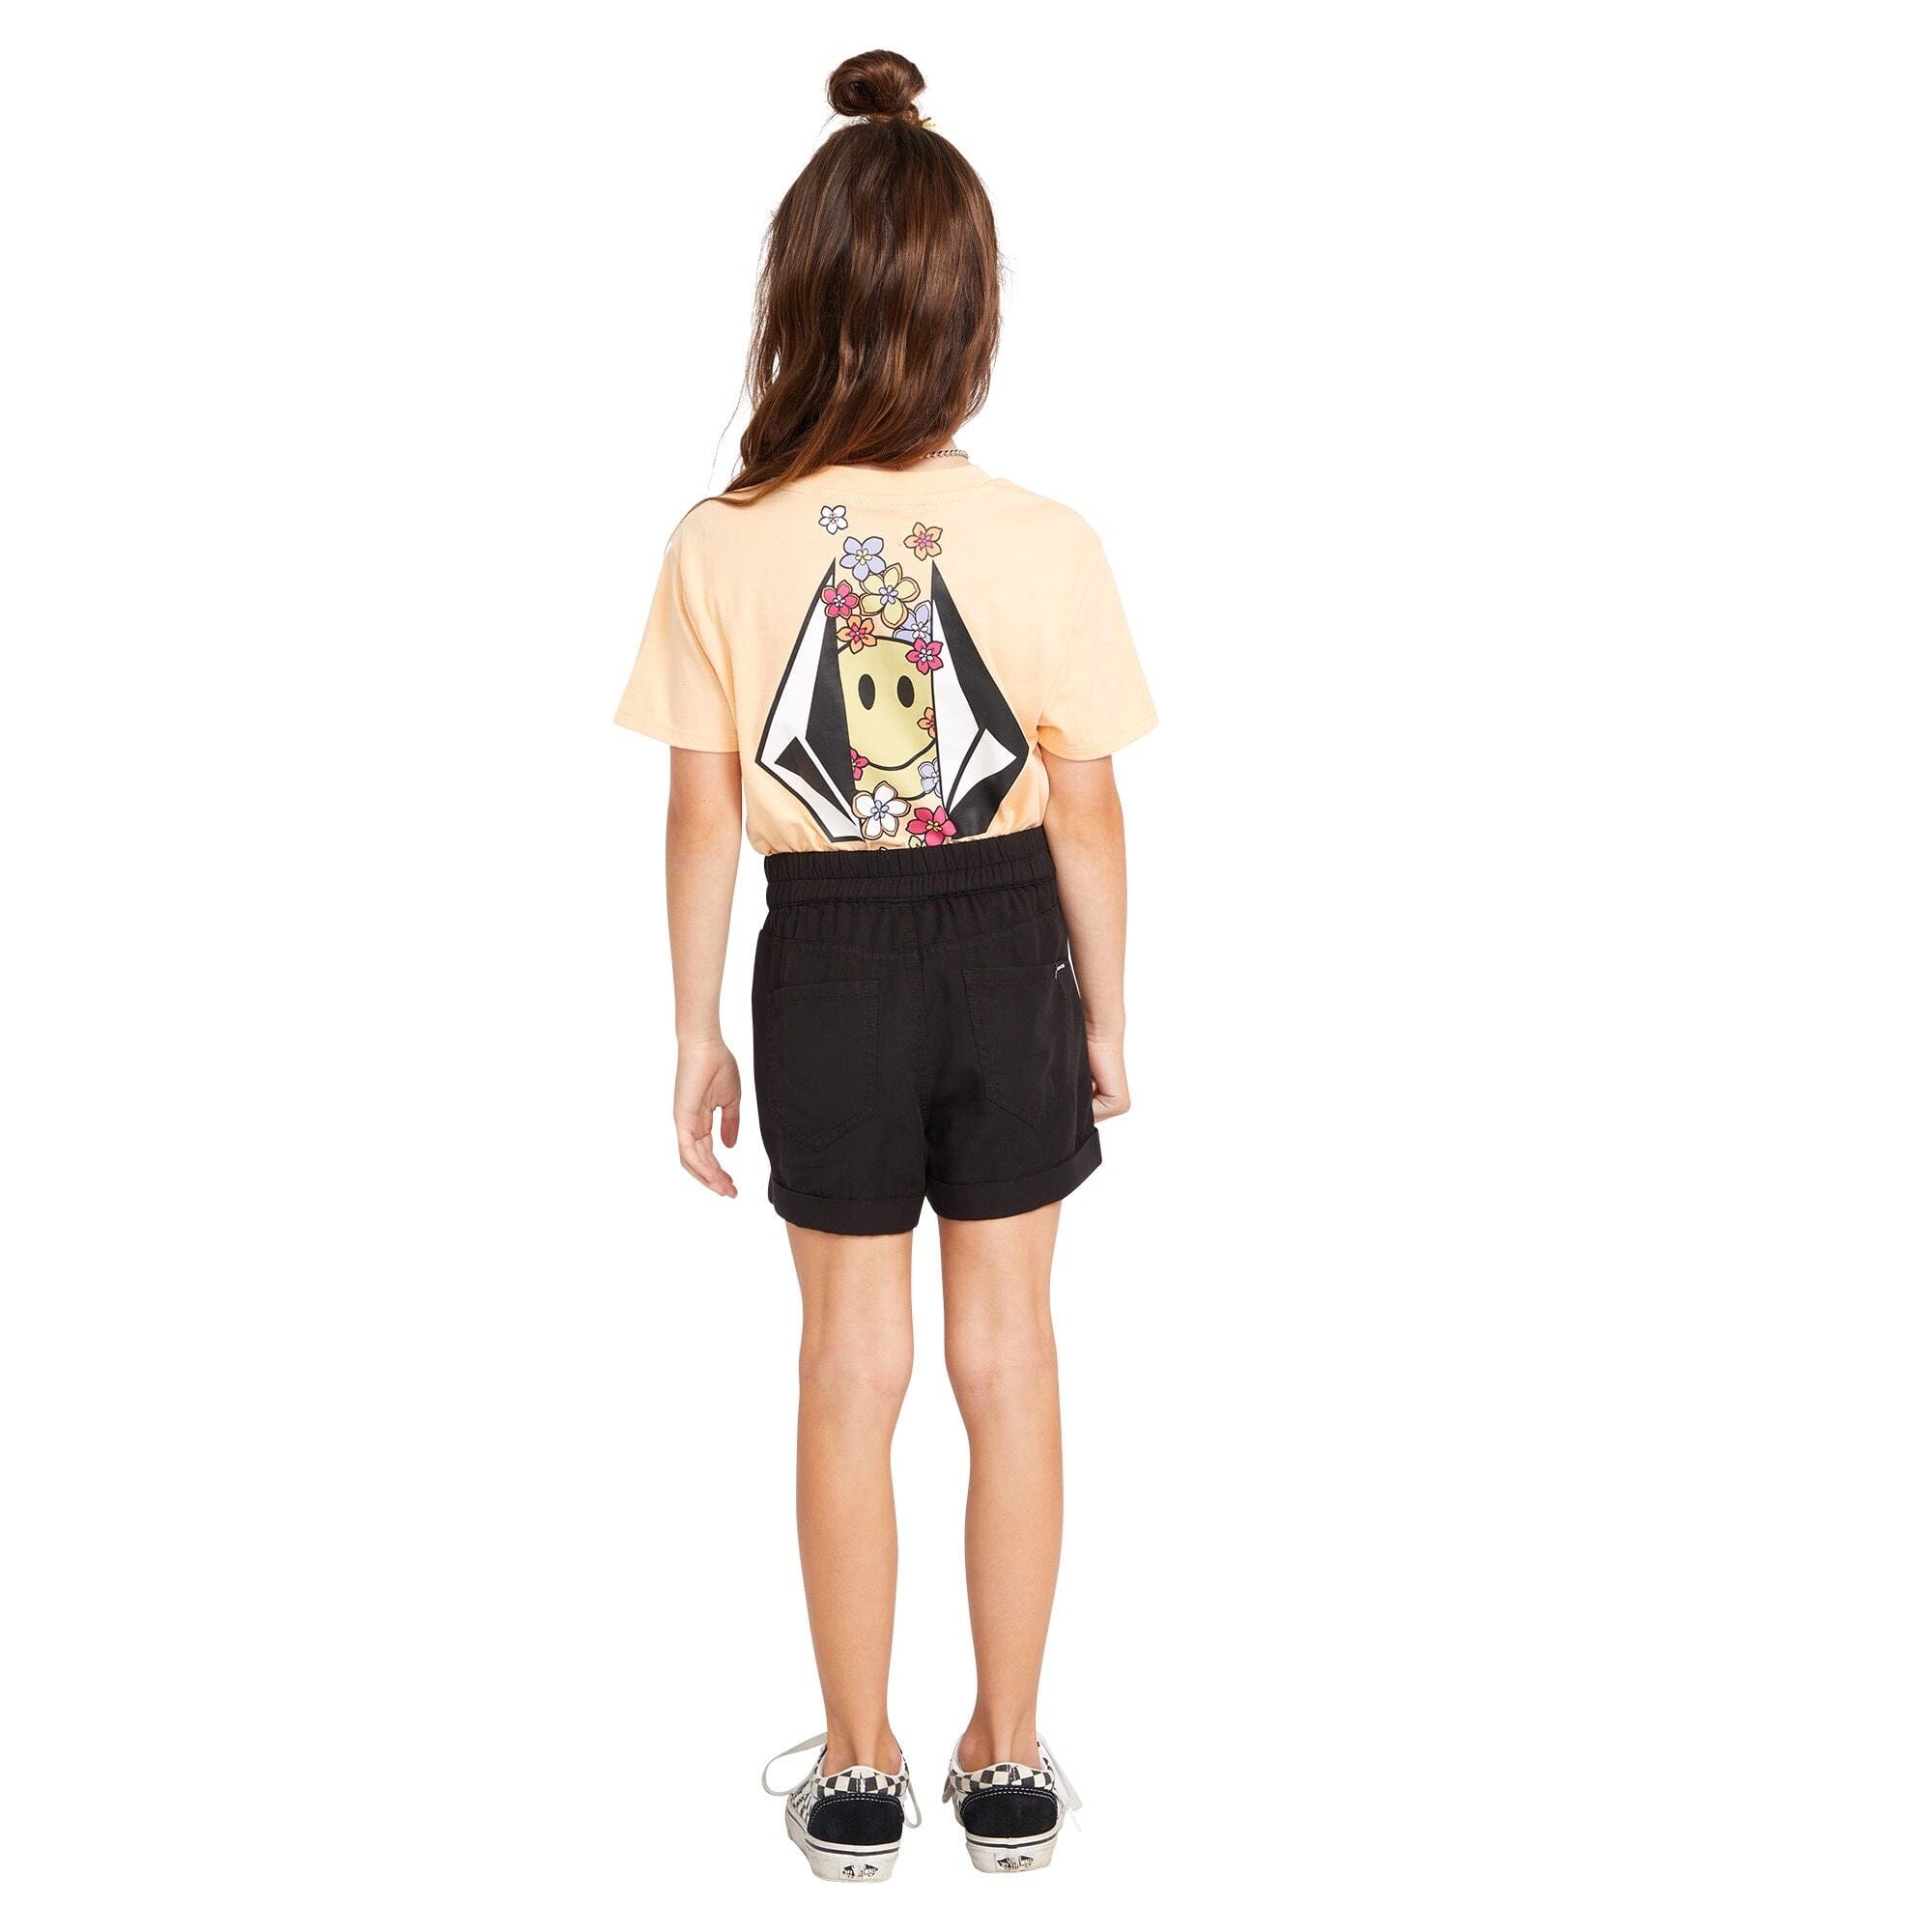 VOLCOM Girl's Sunday Strut Shorts Black Out Girl's Walkshorts Volcom 